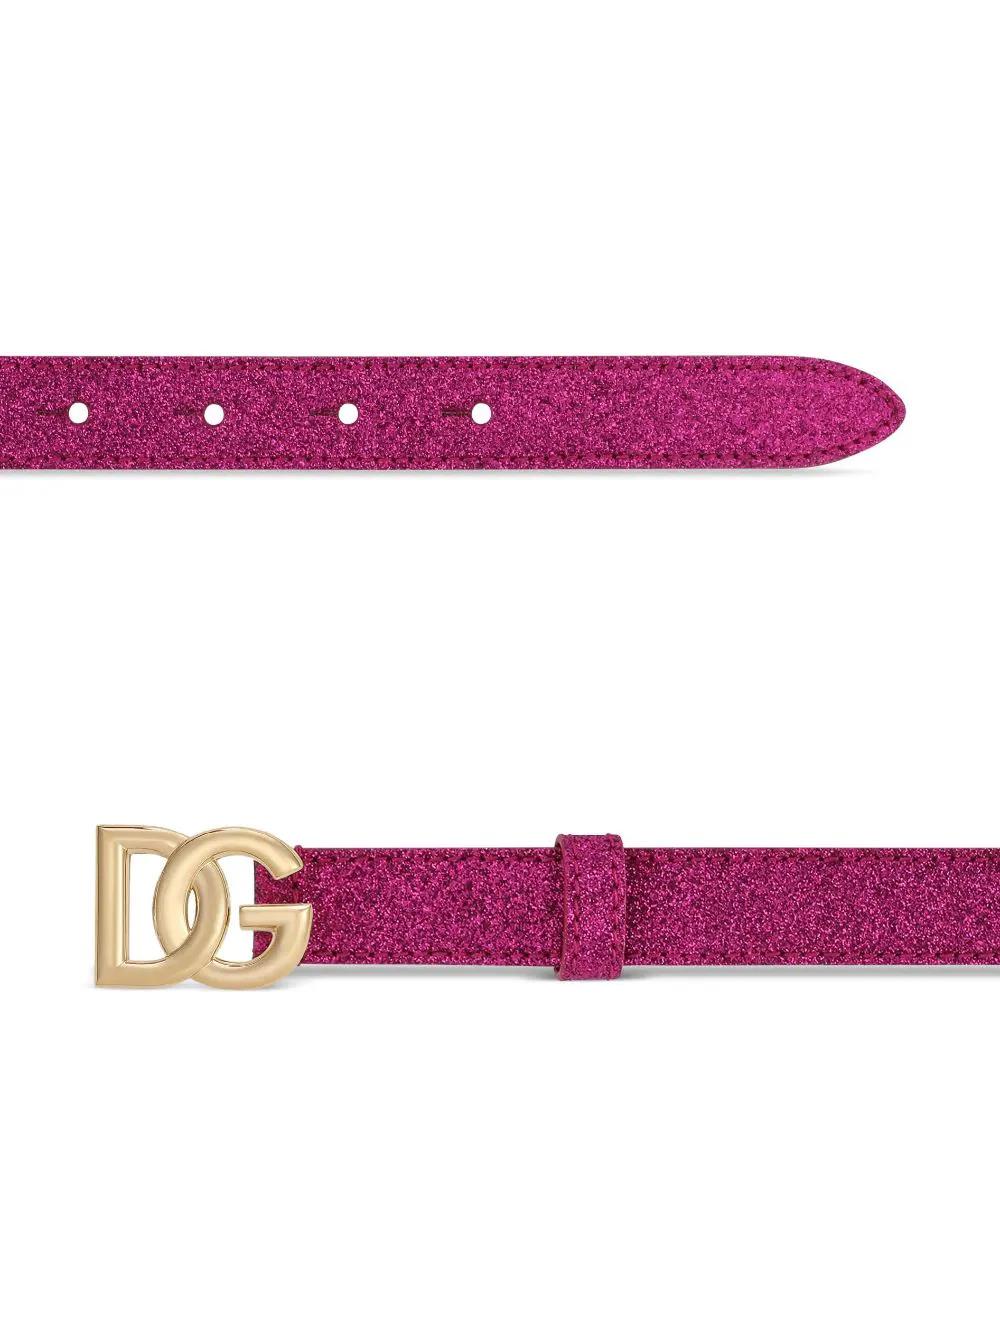 Fucsia glittered patent leather girl DOLCE & GABBANA belt | Carofiglio Junior